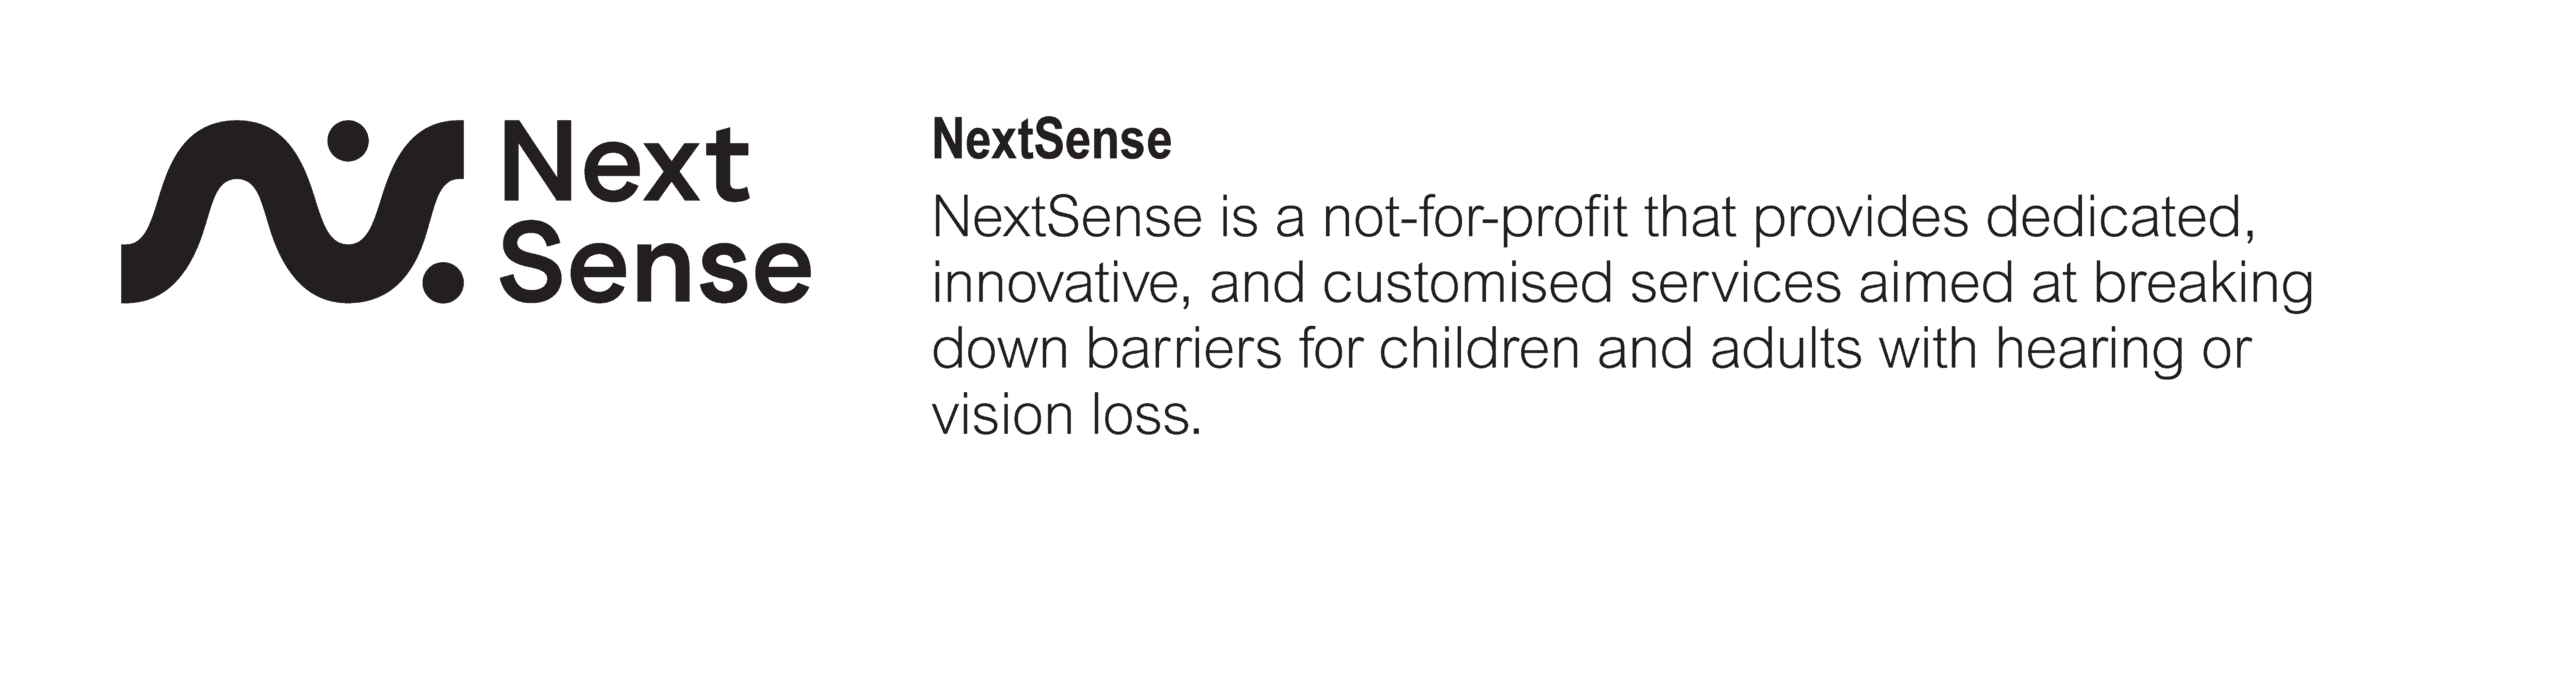 Charity_NextSense black only (no colour version)